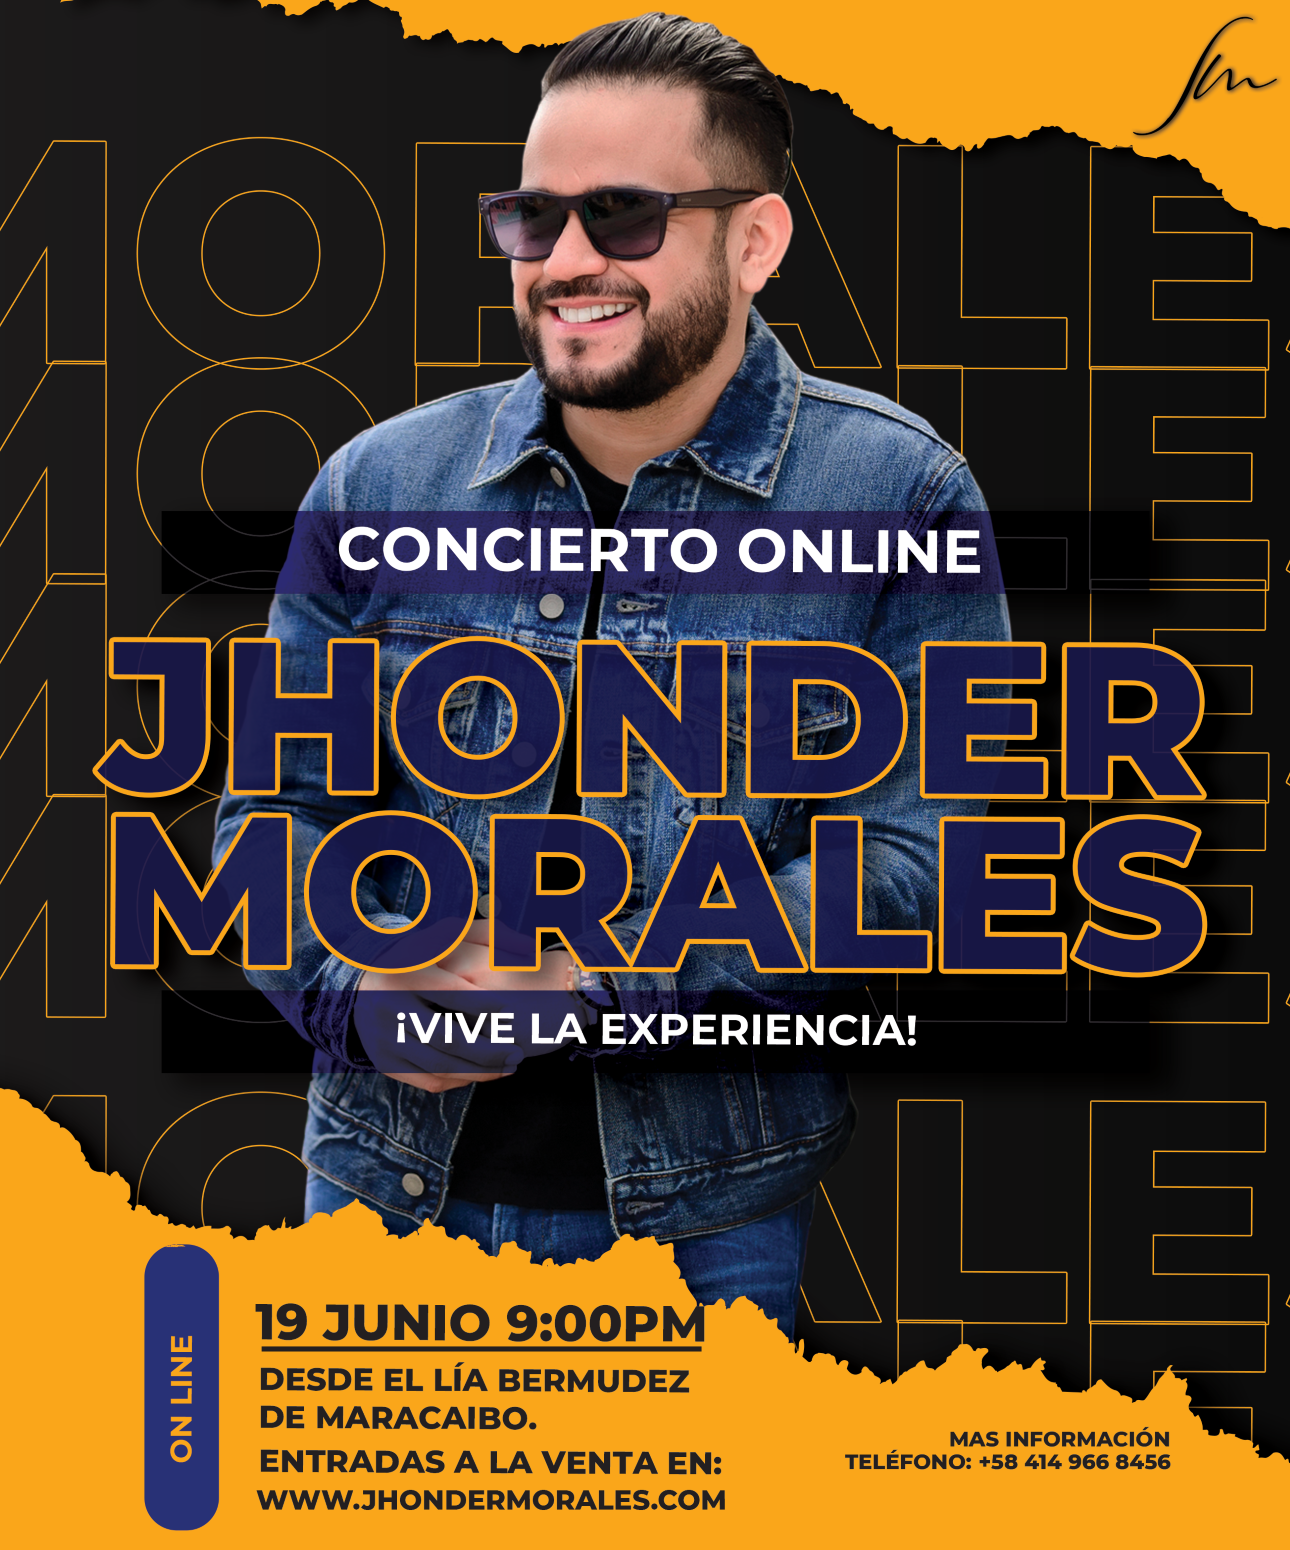 Jhonder Morales homenaje